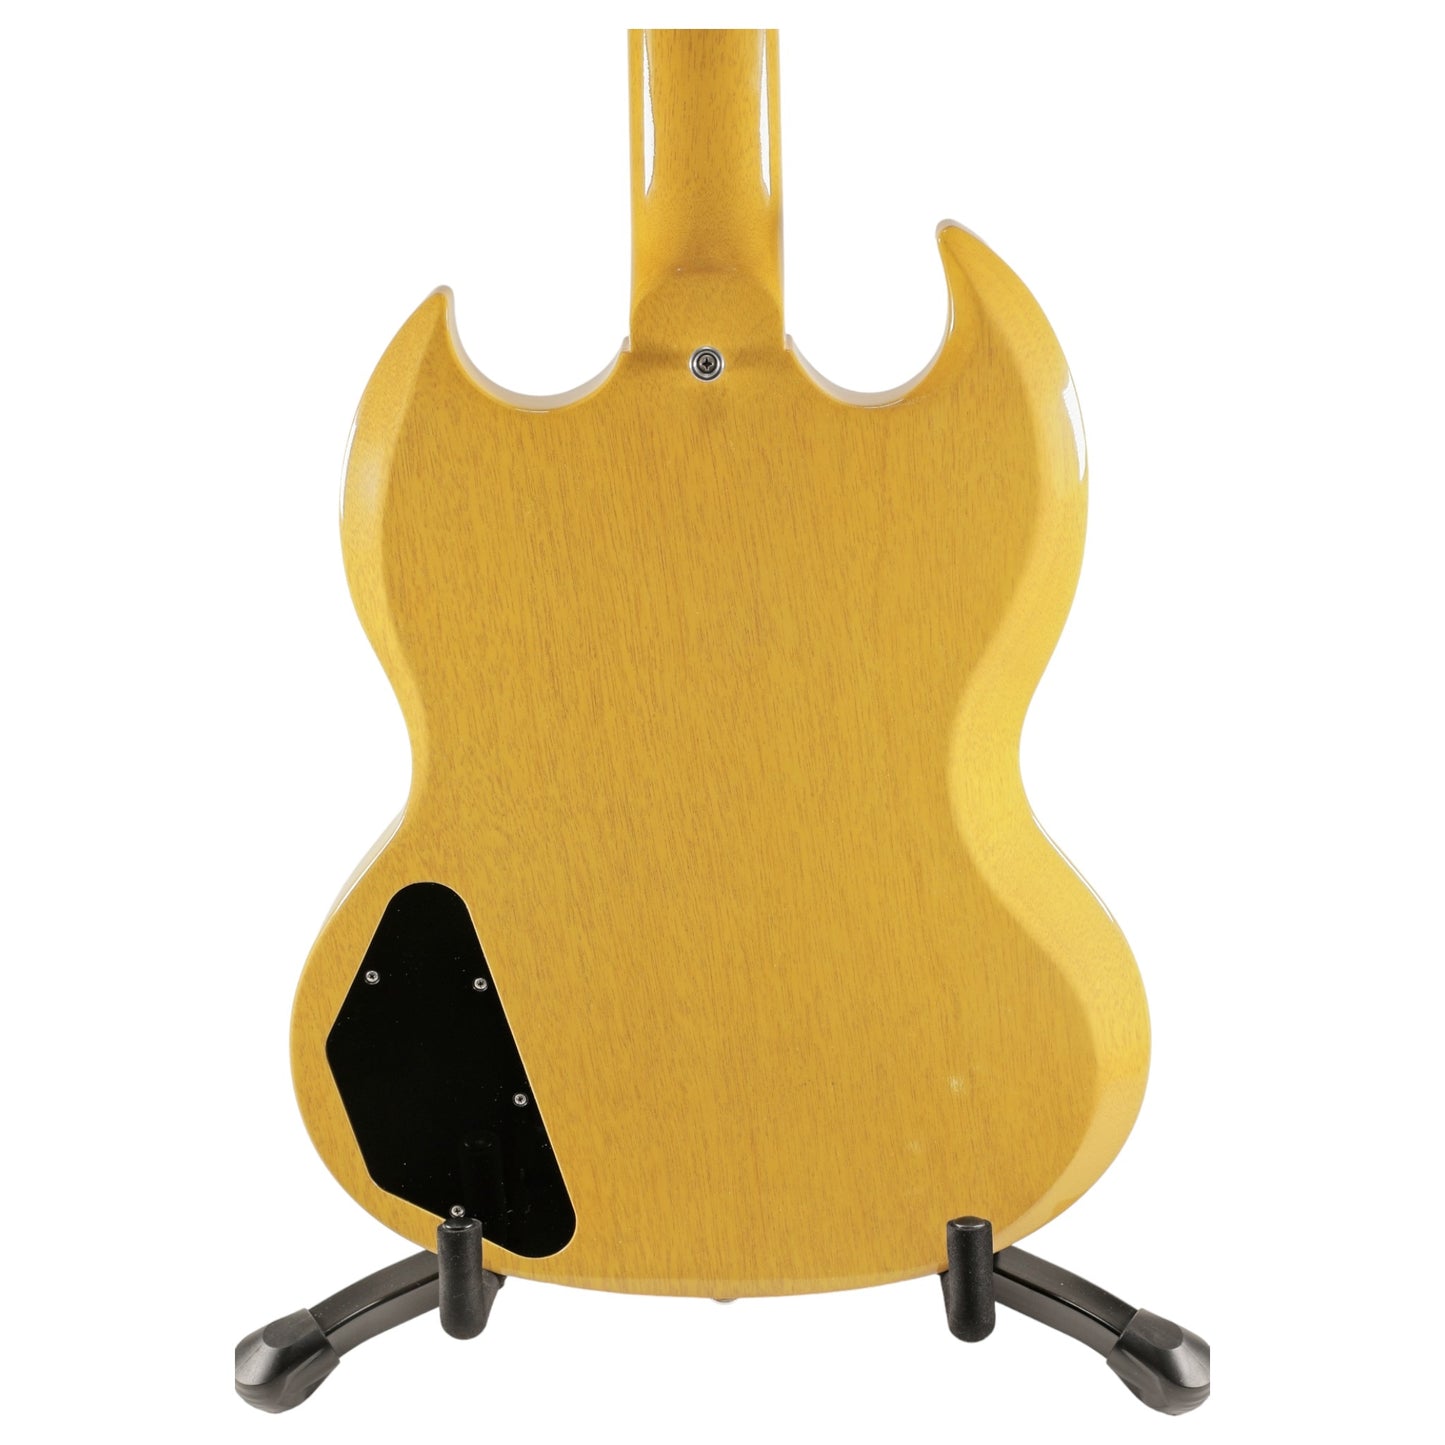 2003 Gibson Custom Shop Les Paul SG Standard, '61 Historic Reissue - TV Yellow